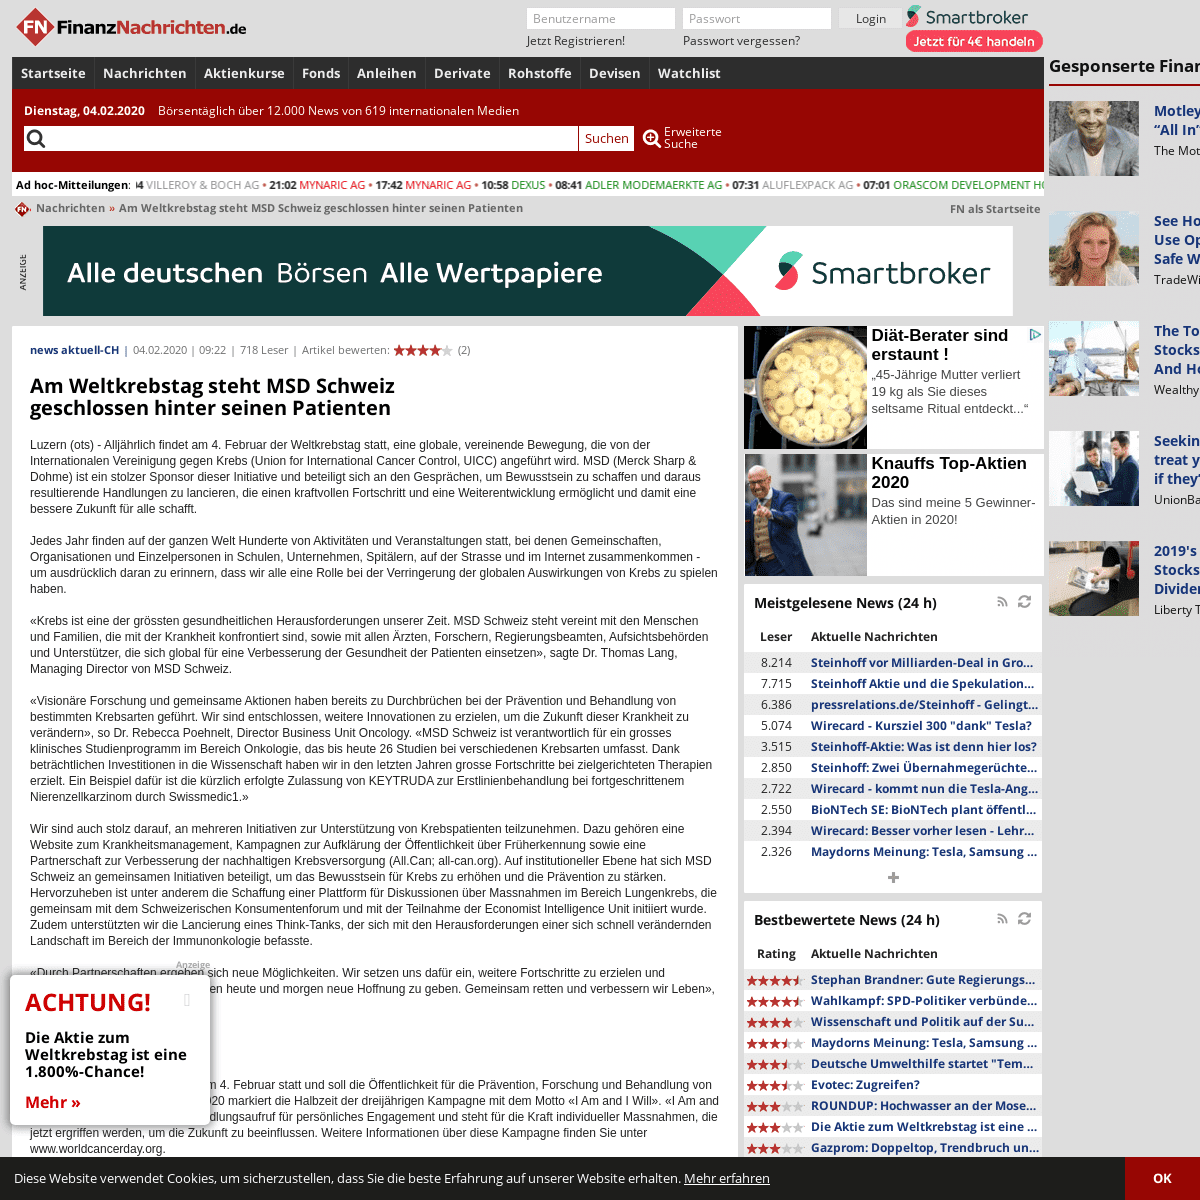 A complete backup of www.finanznachrichten.de/nachrichten-2020-02/48762105-am-weltkrebstag-steht-msd-schweiz-geschlossen-hinter-